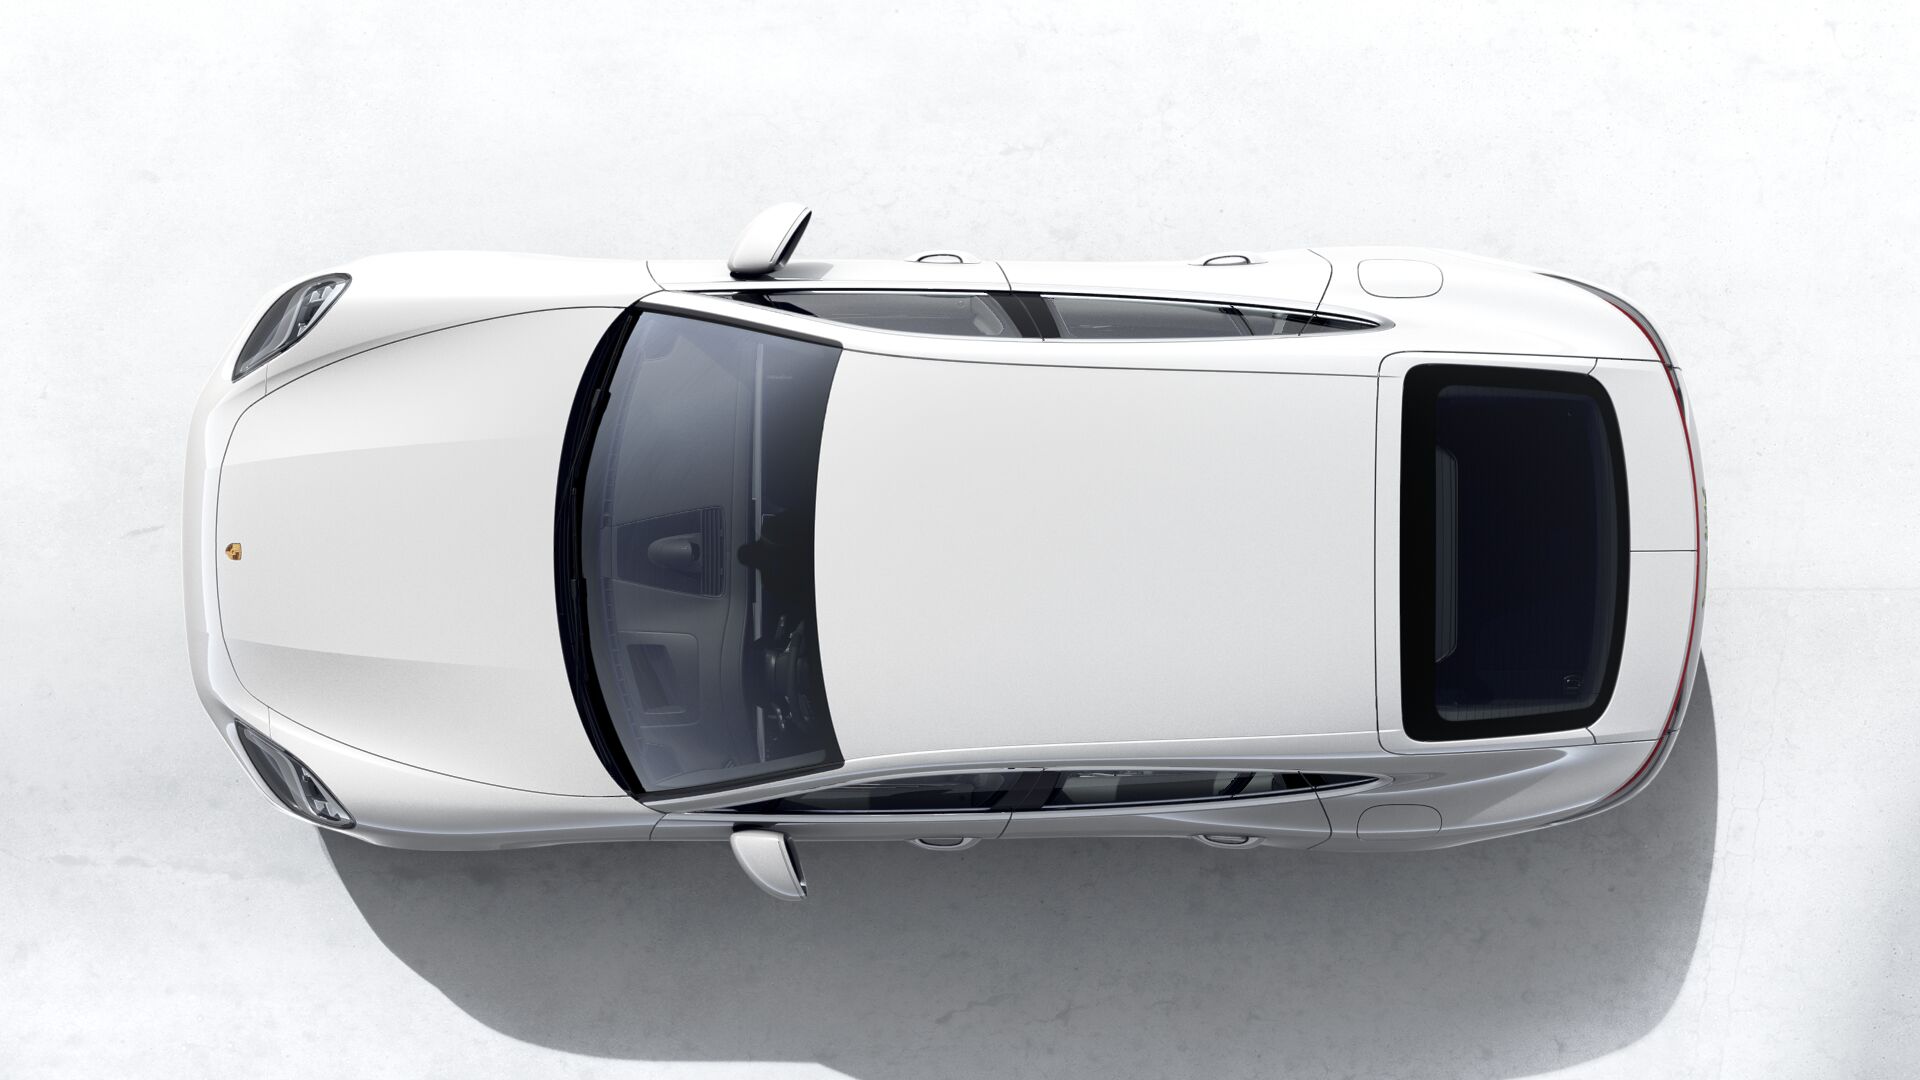 Außenansicht des Panamera Turbo S E-Hybrid